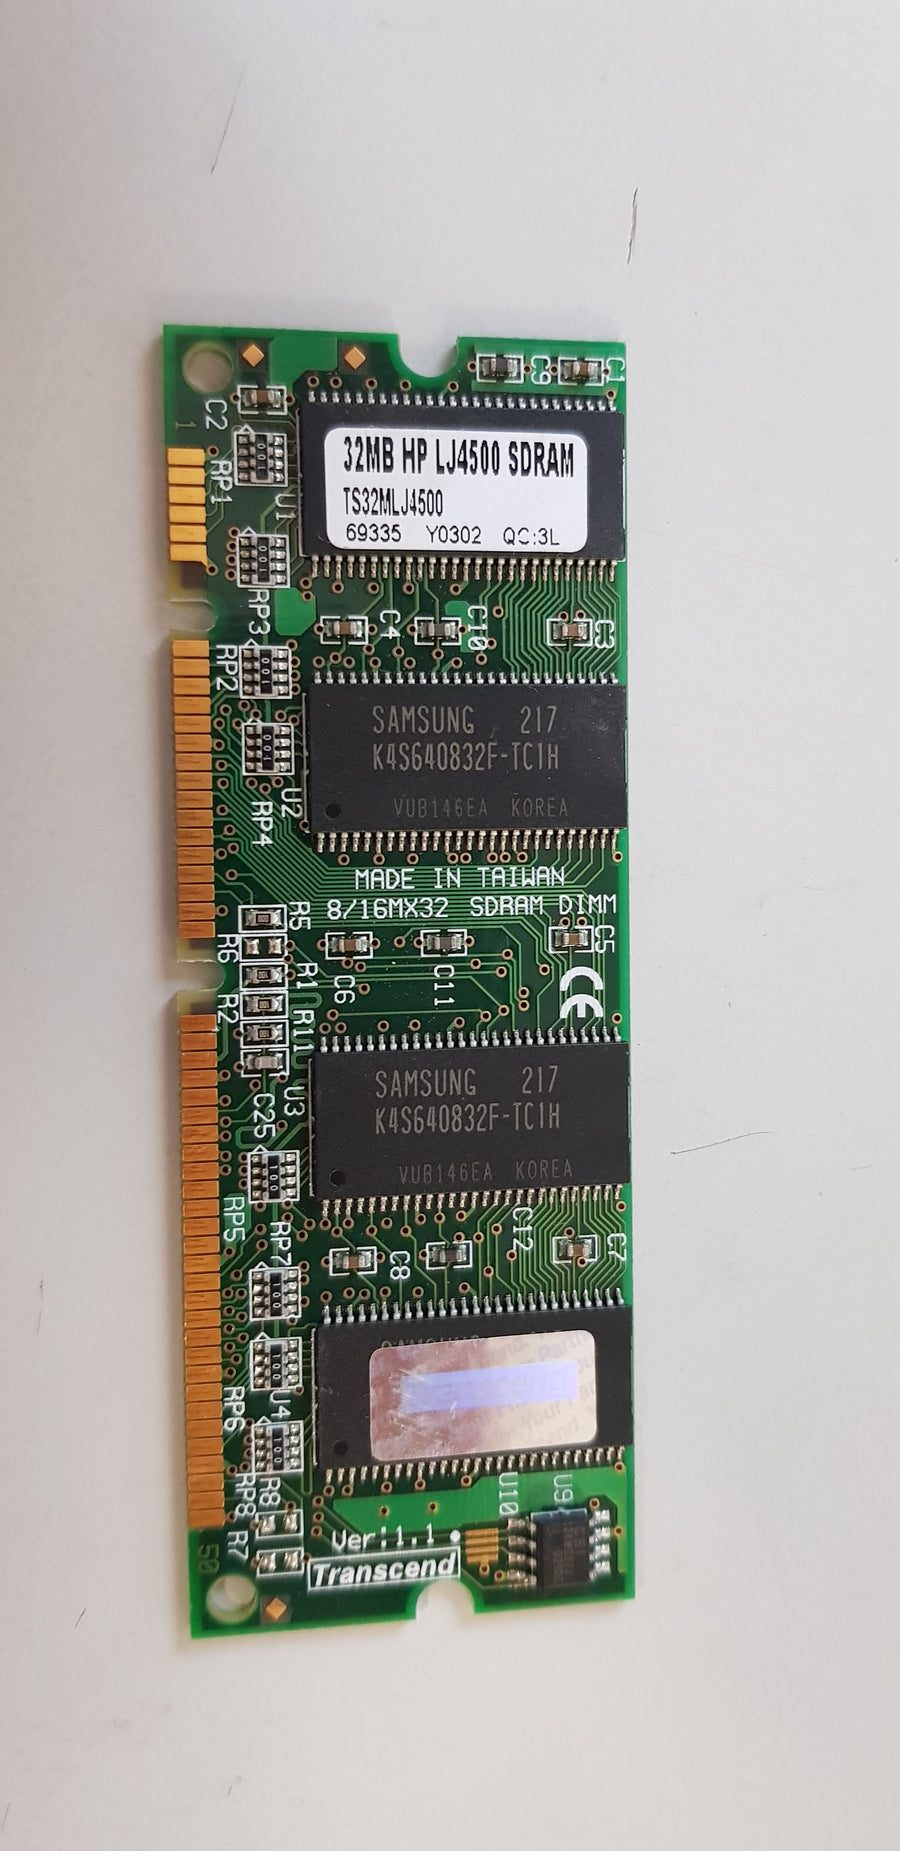 Transcend 32MB SDRAM Memory Module 100 MHz PC100 Non-ECC 100-pin (TS32MLJ4500)